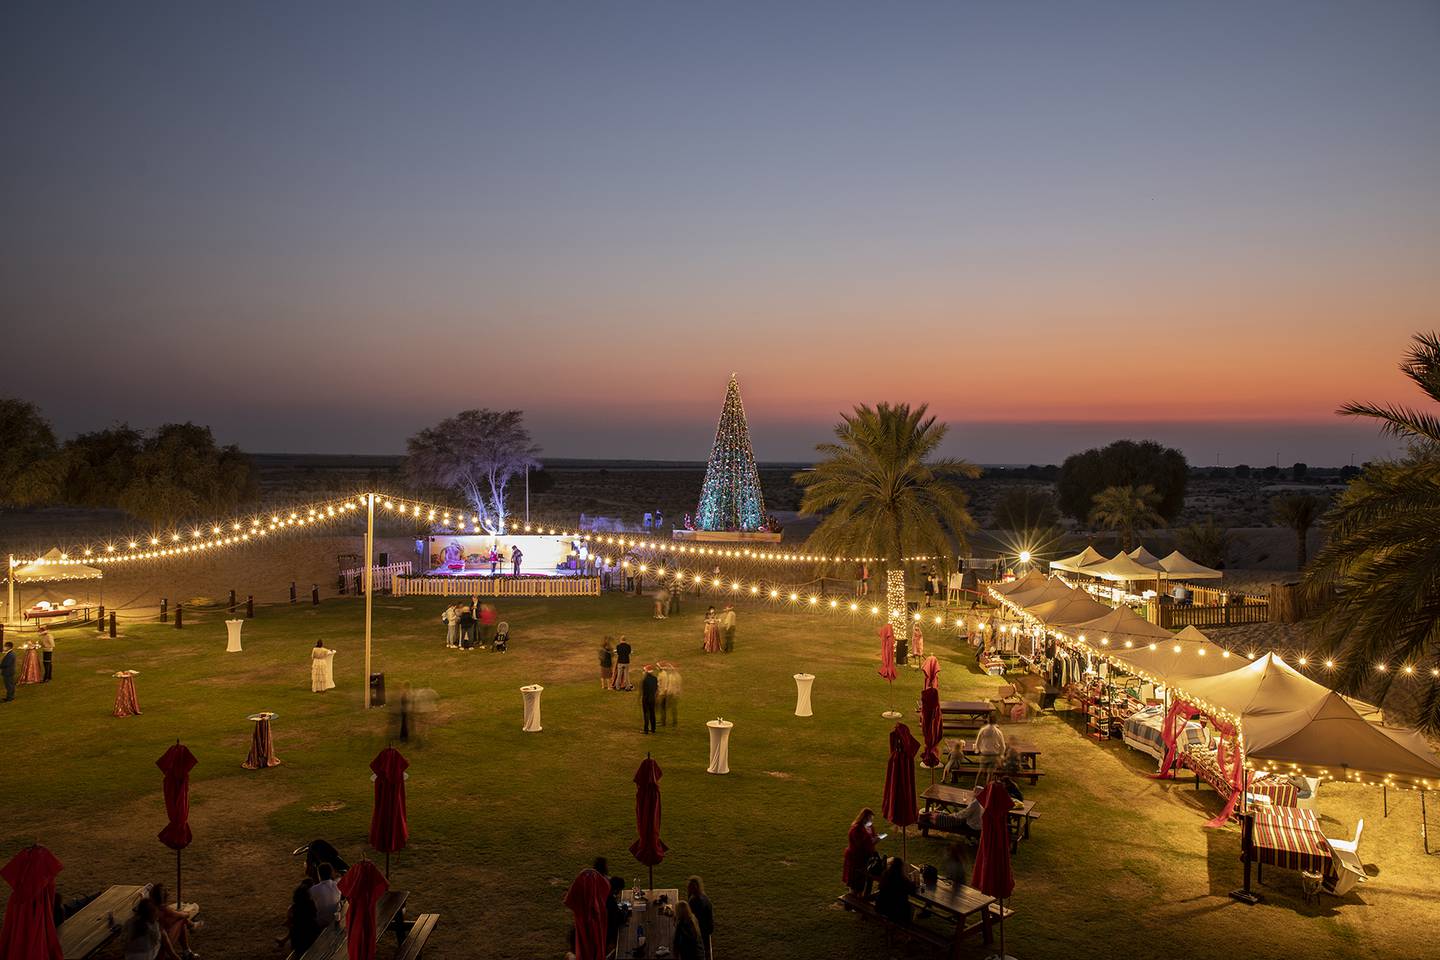 Bab Al Shams is hosting a festive market against the desert backdrop. Photo: Bab Al Shams